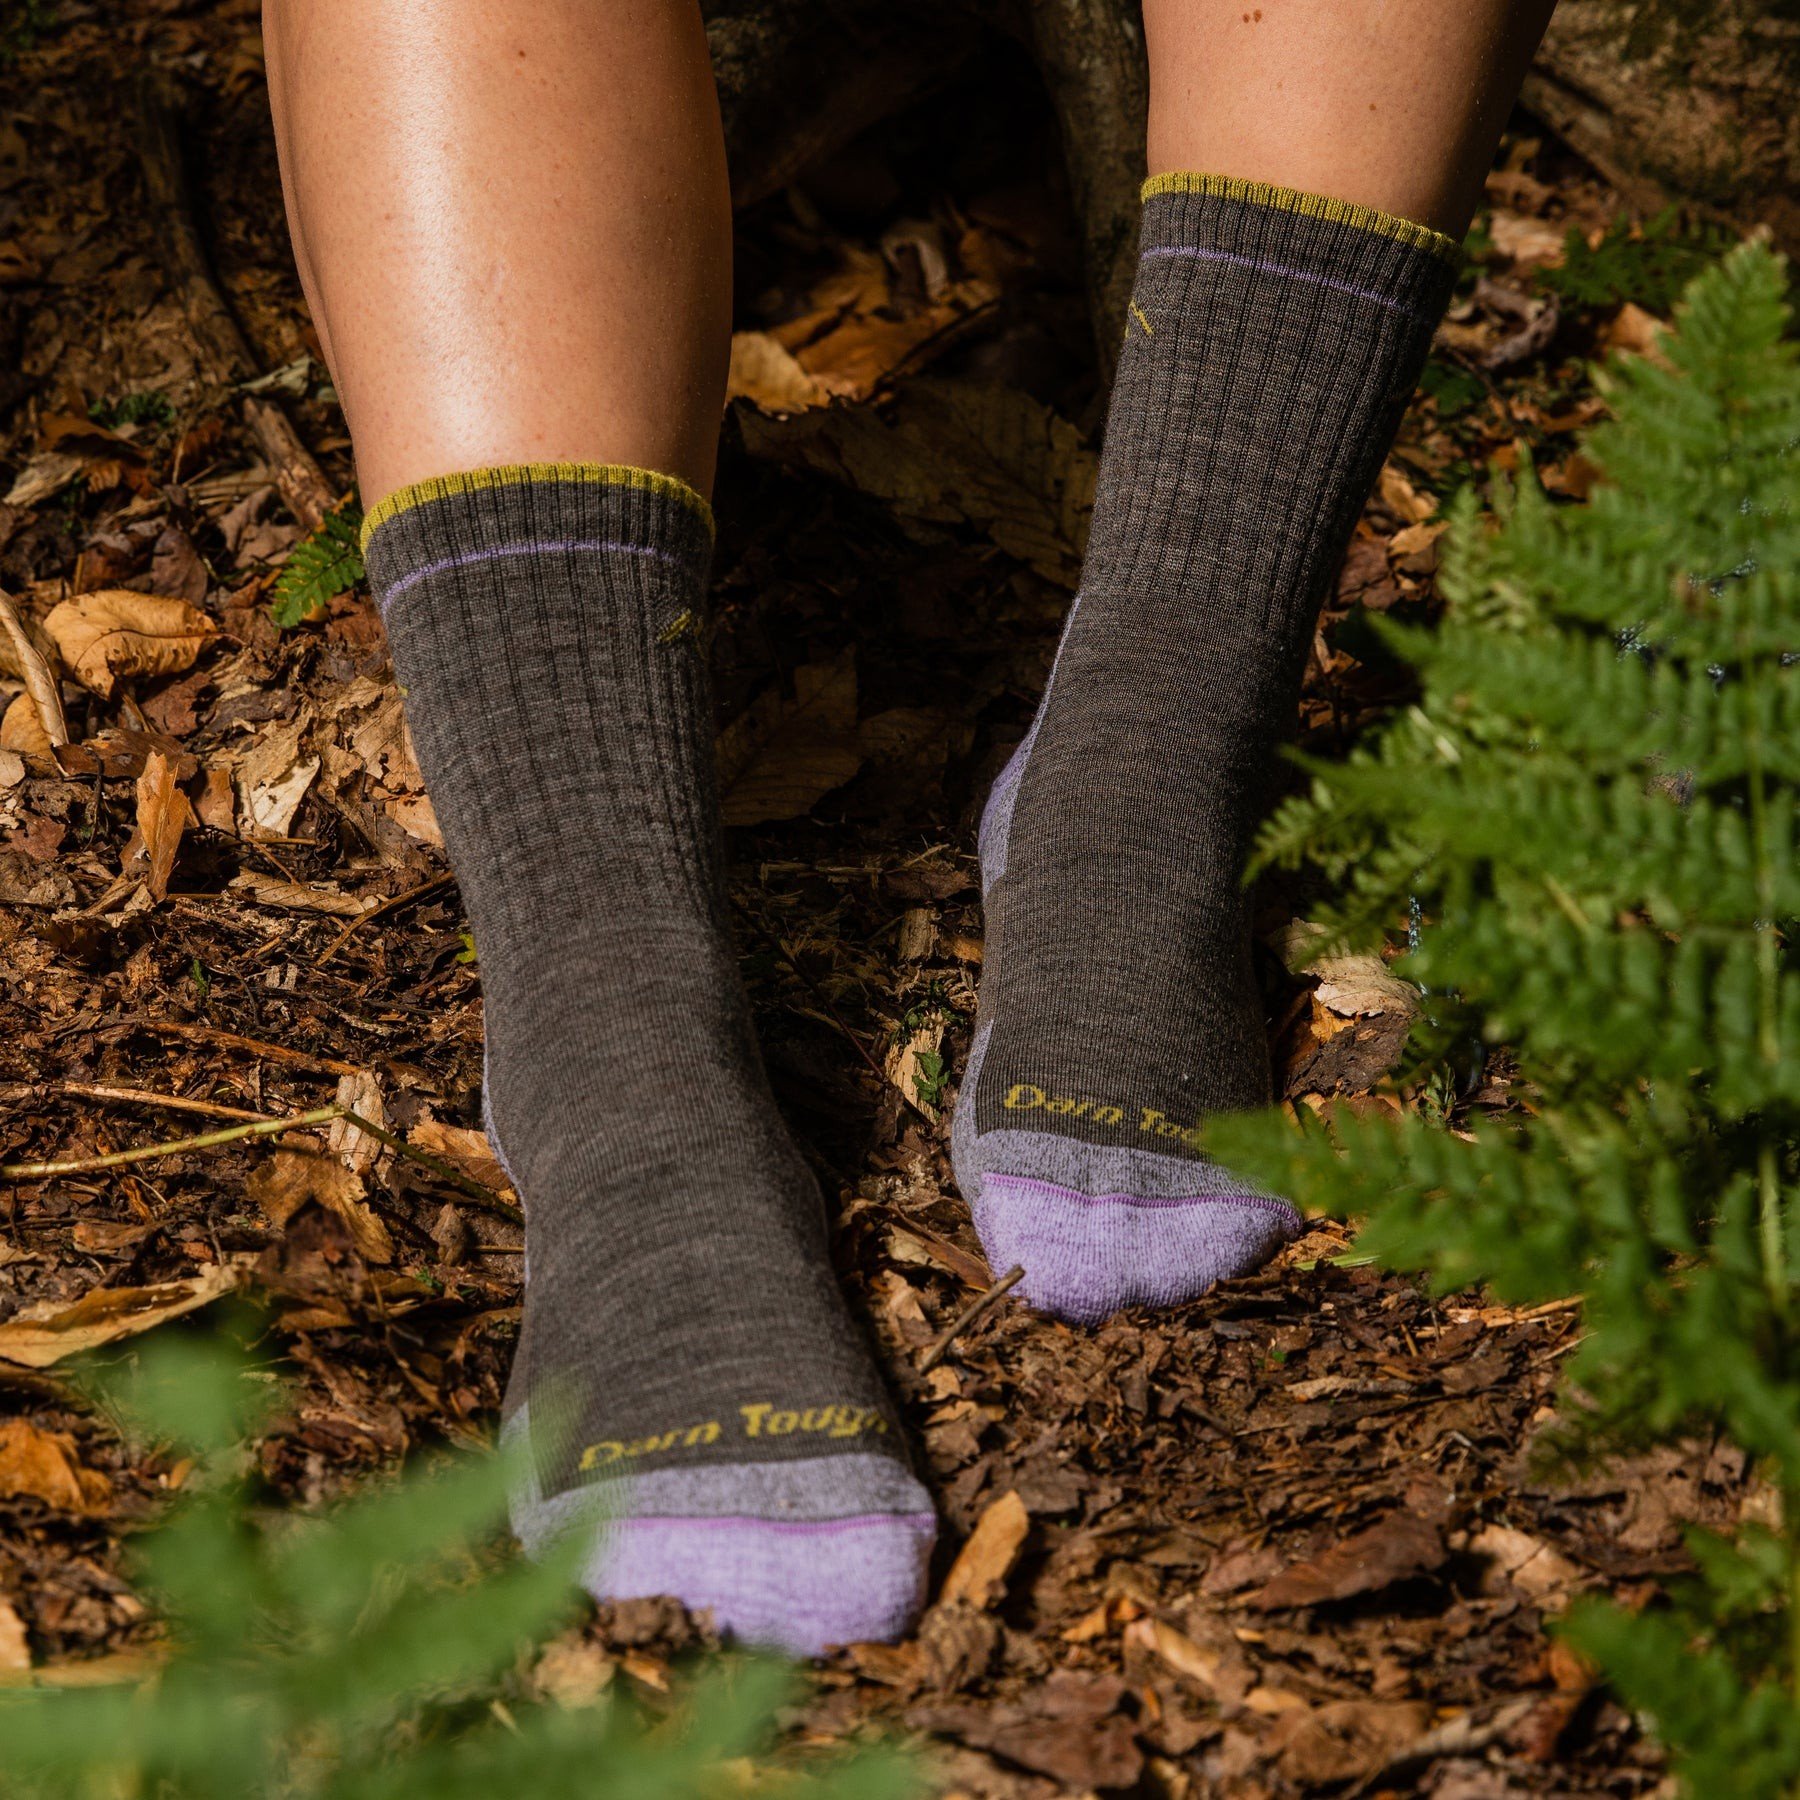 Darn Tough Mid Hiker Micro Crew Cushion Women's Hiking Socks